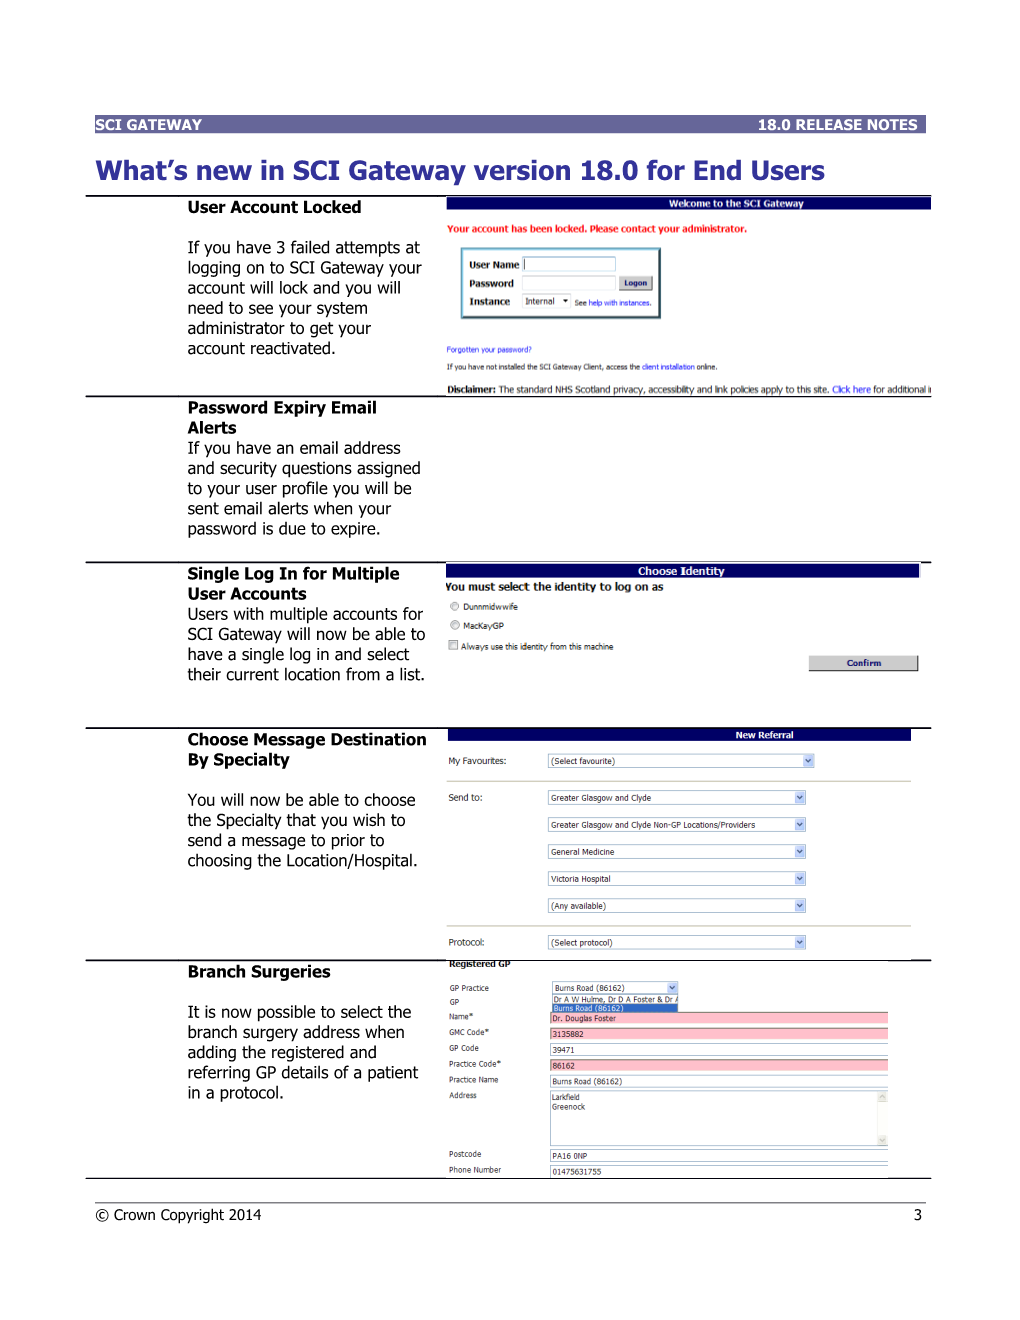 SCI Gatewayversion 18.0 Release Notes